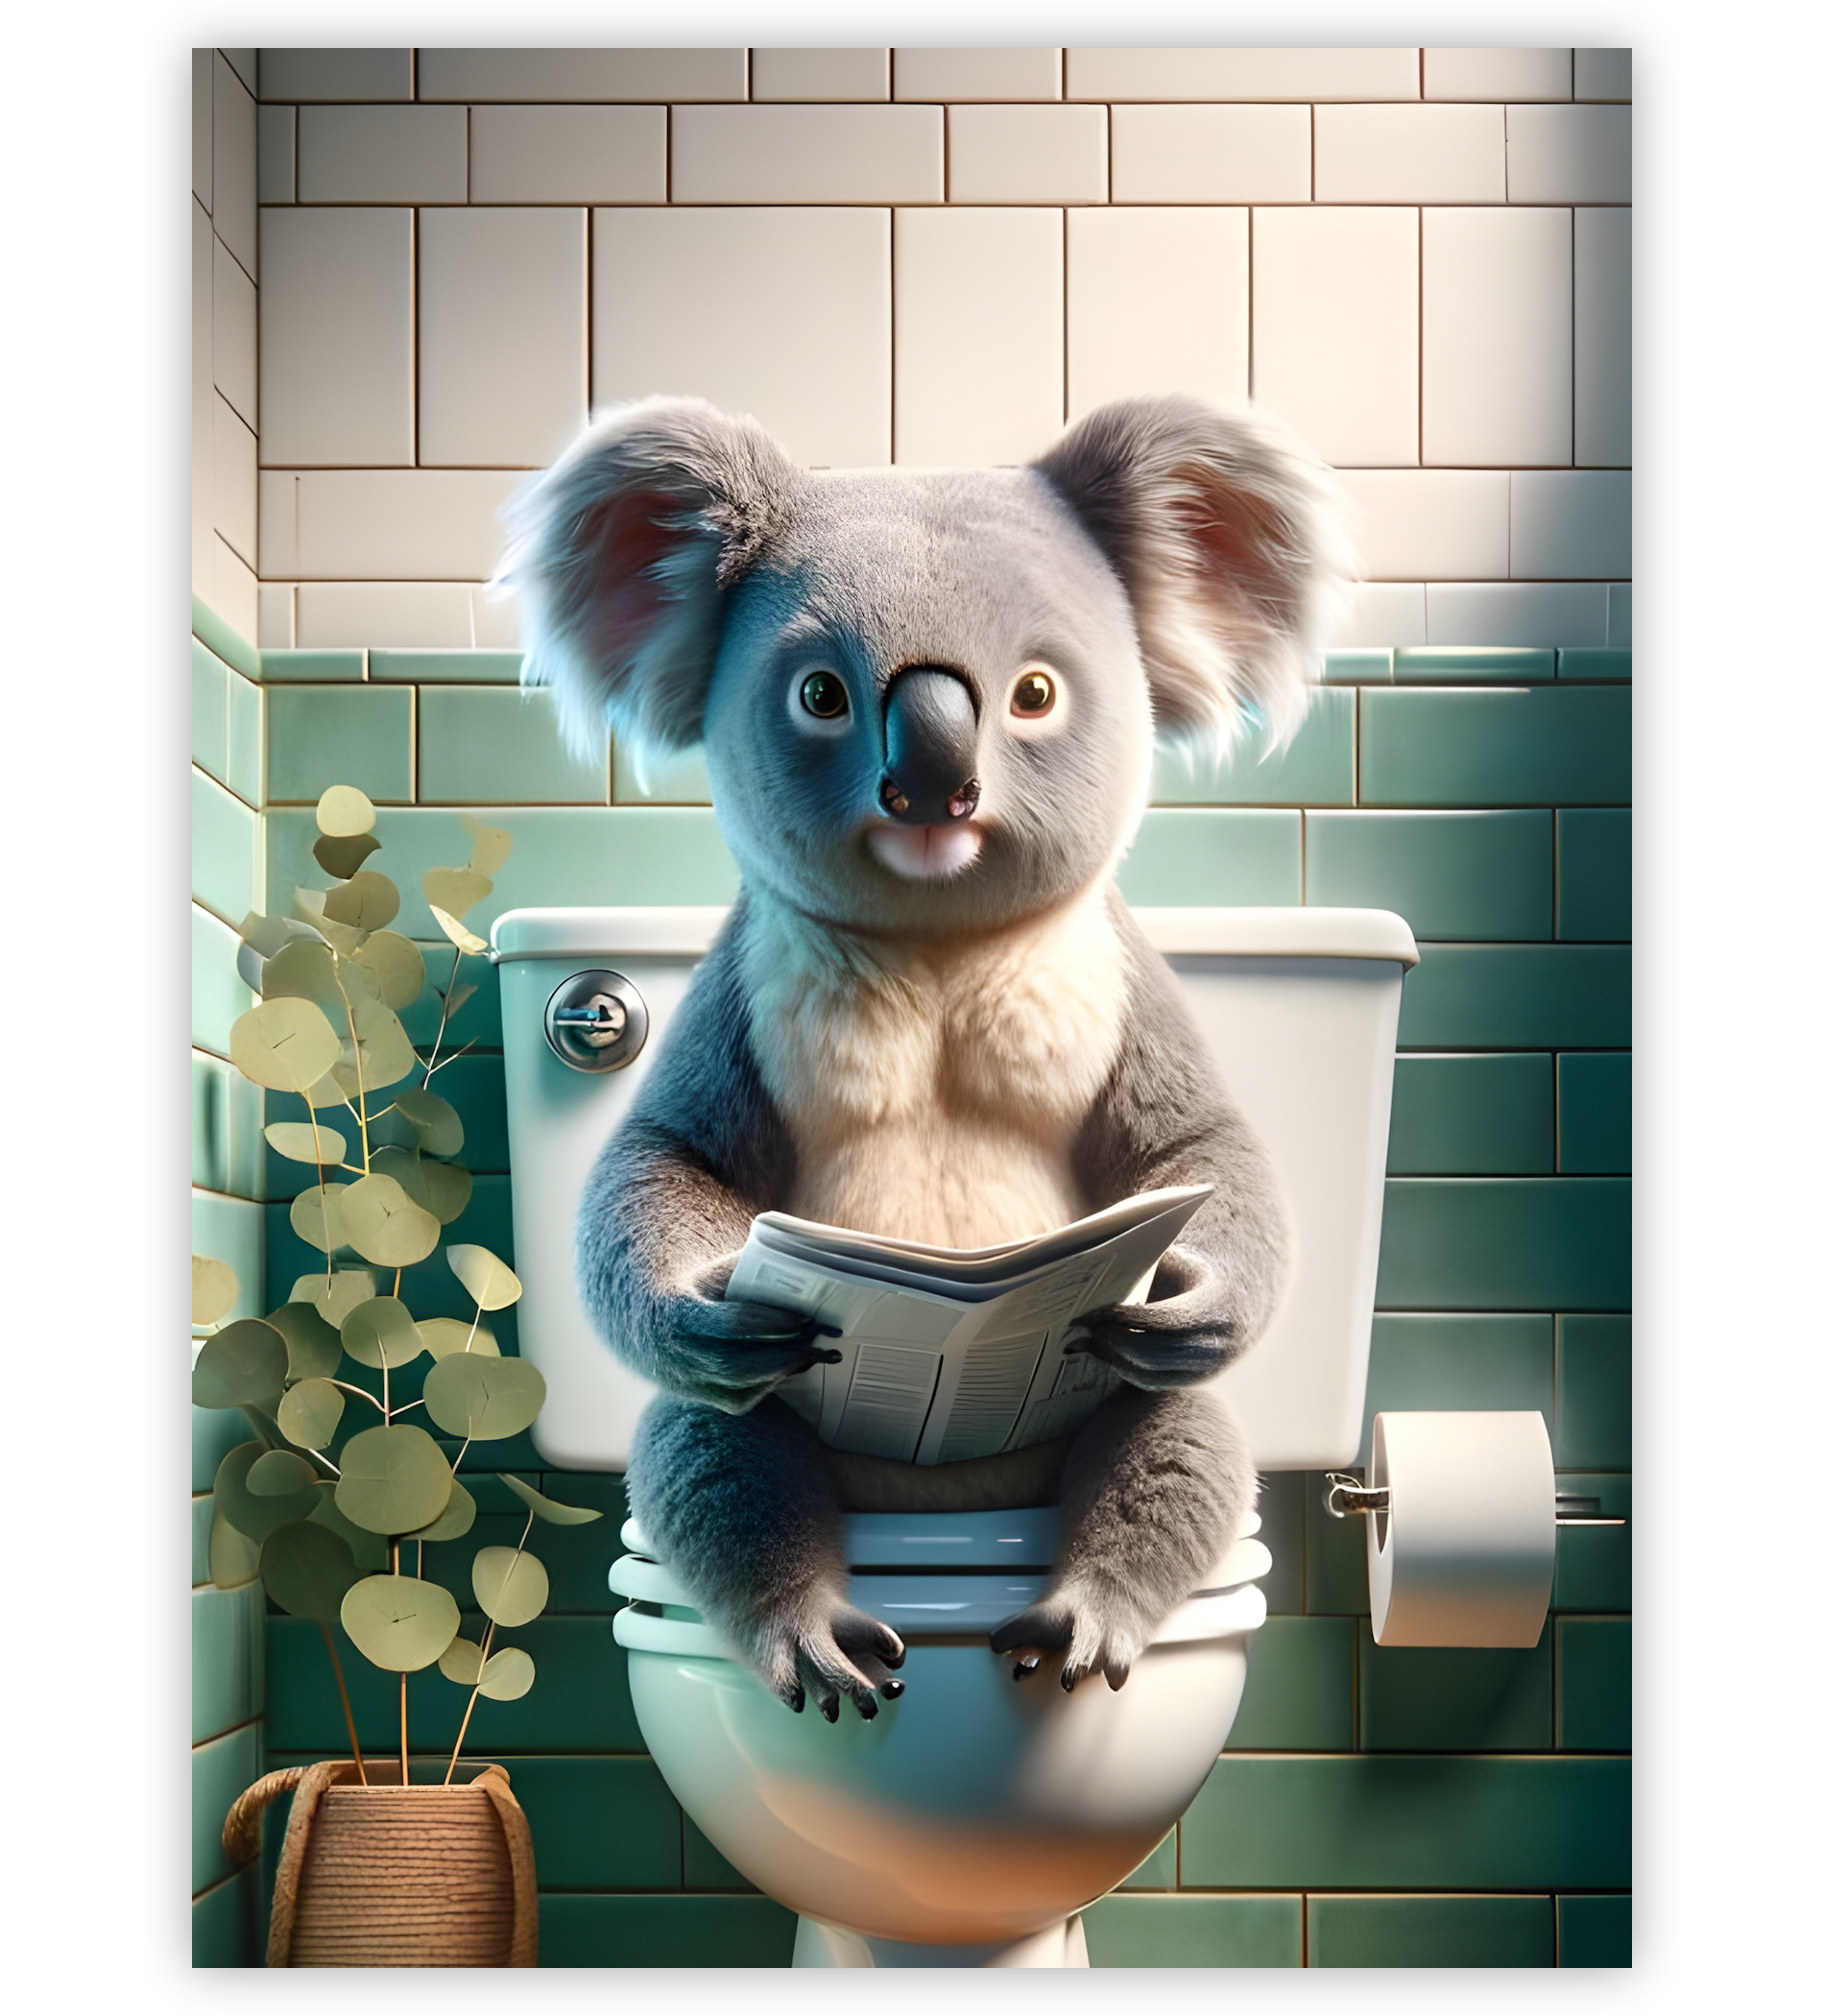 Poster, Wandbild von Koala auf Toilette